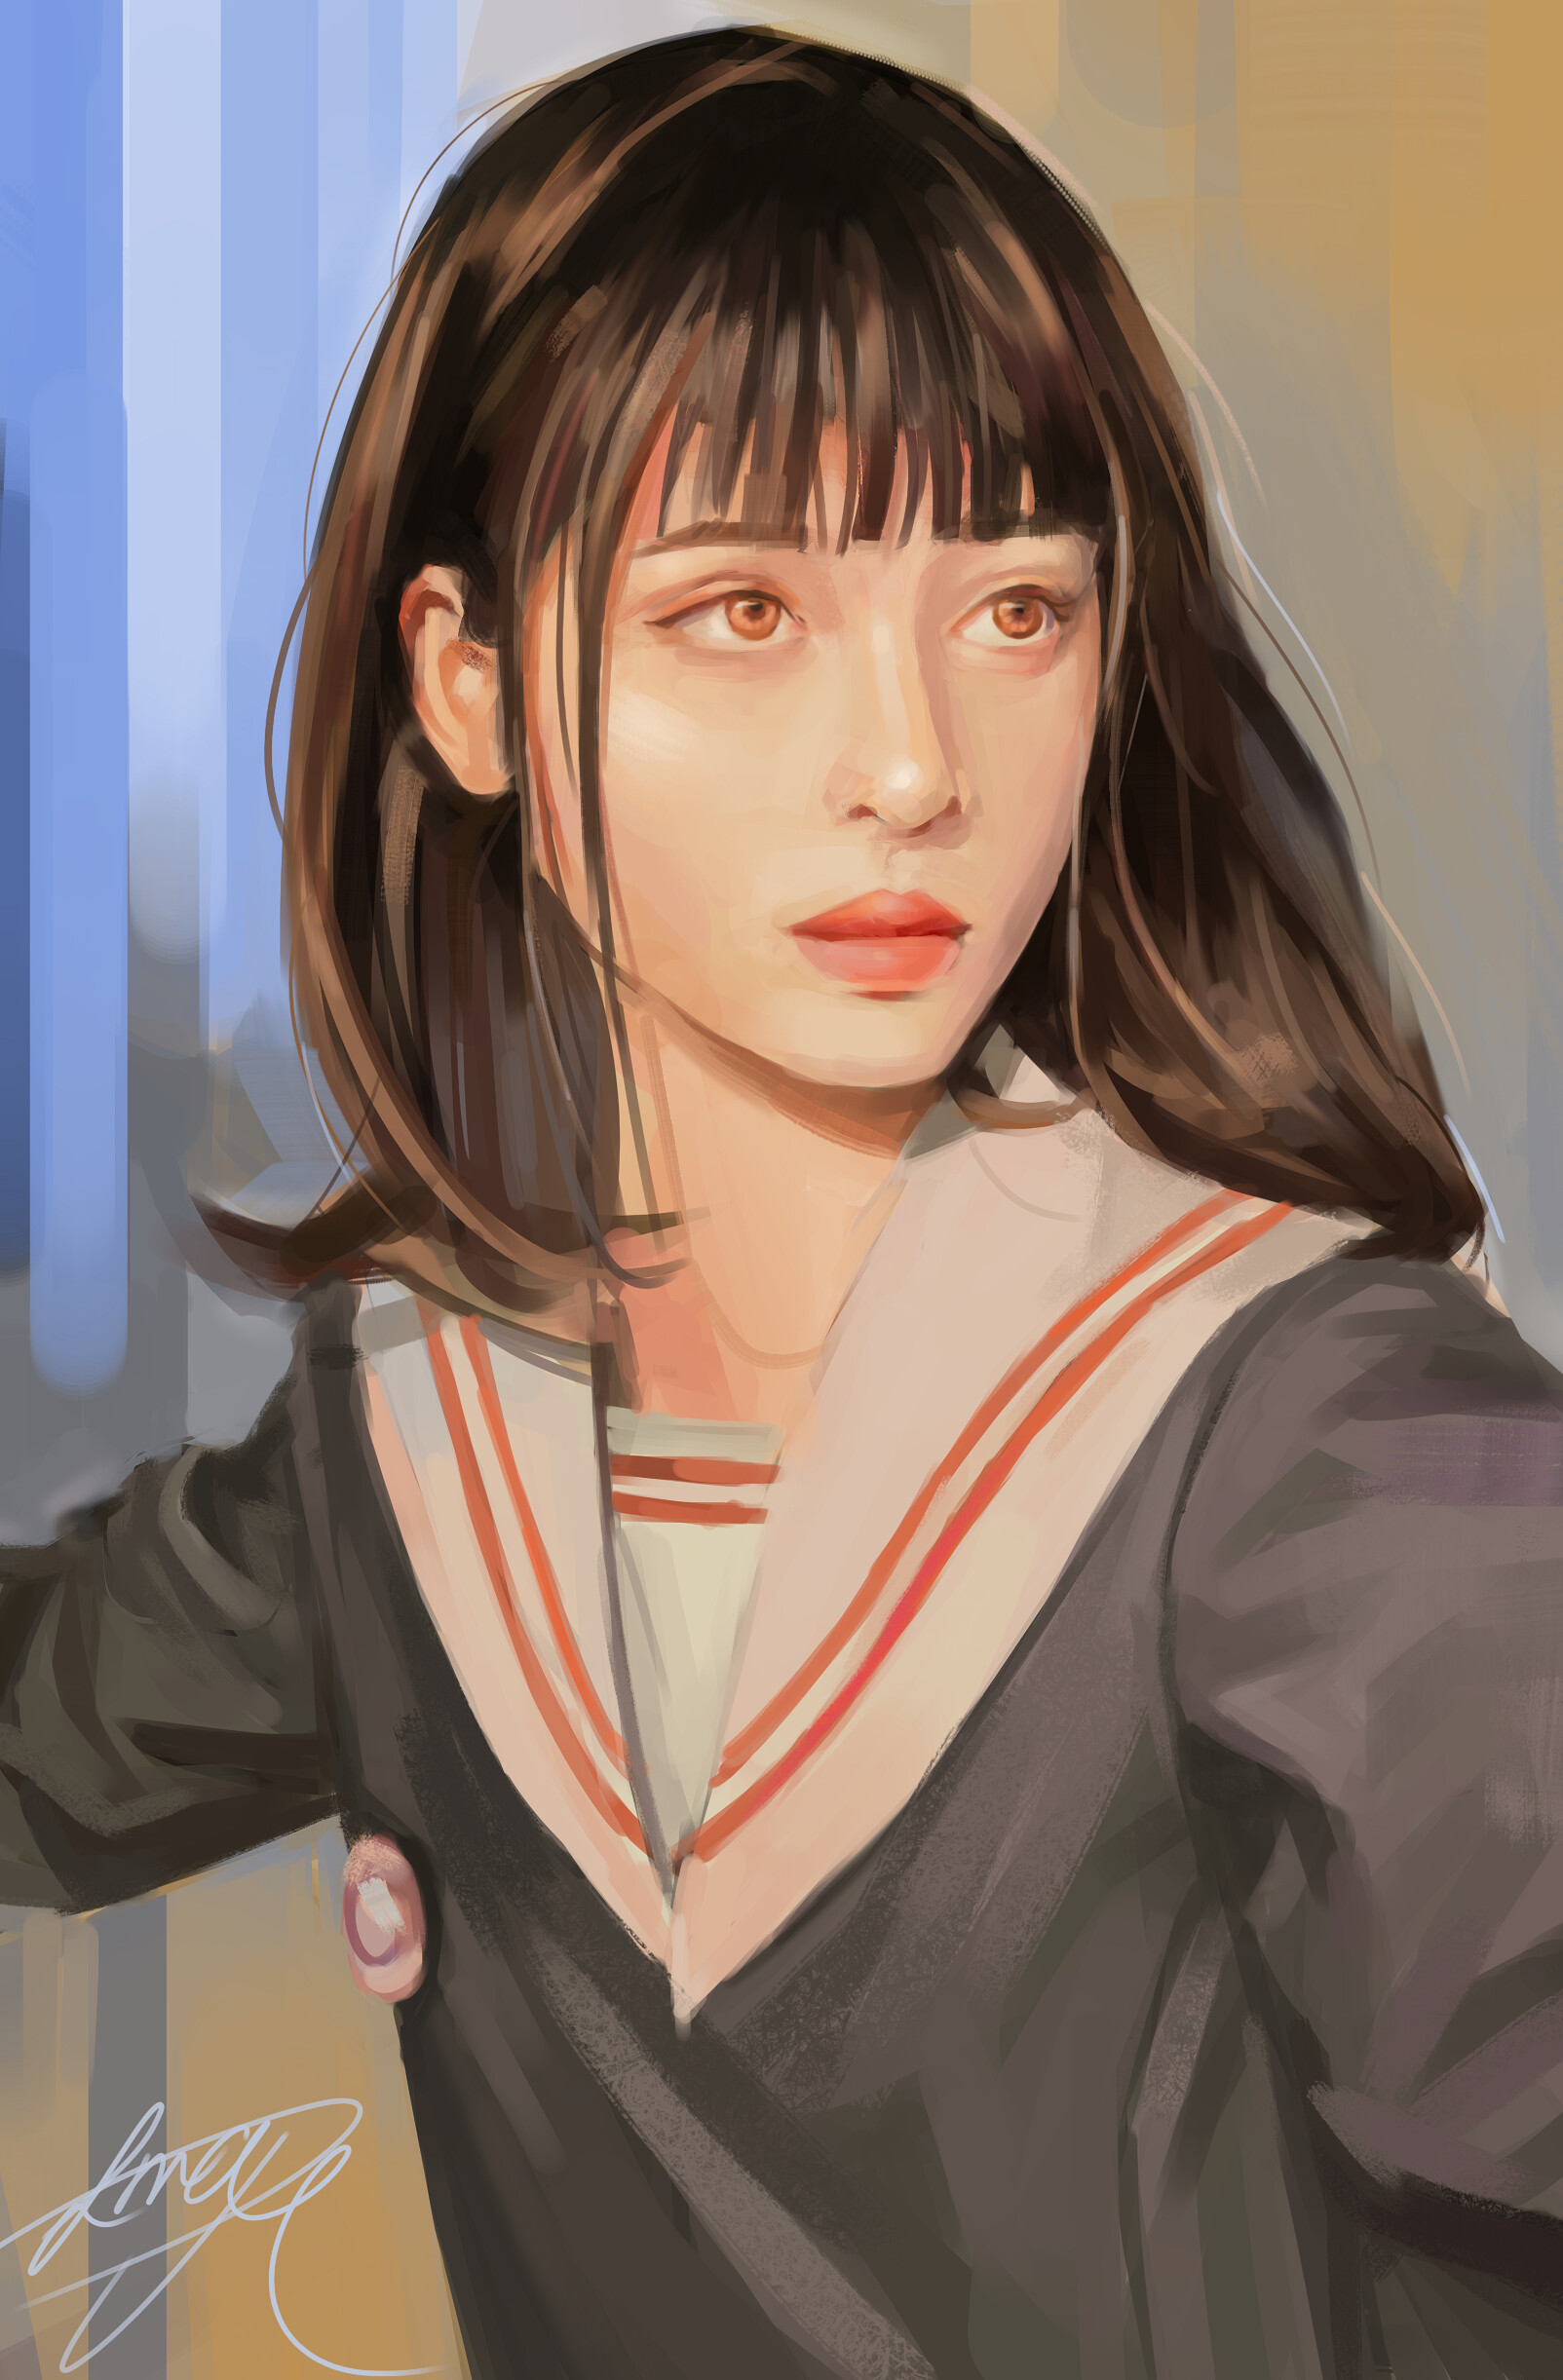 ArtStation - Portrait- Highschool girl